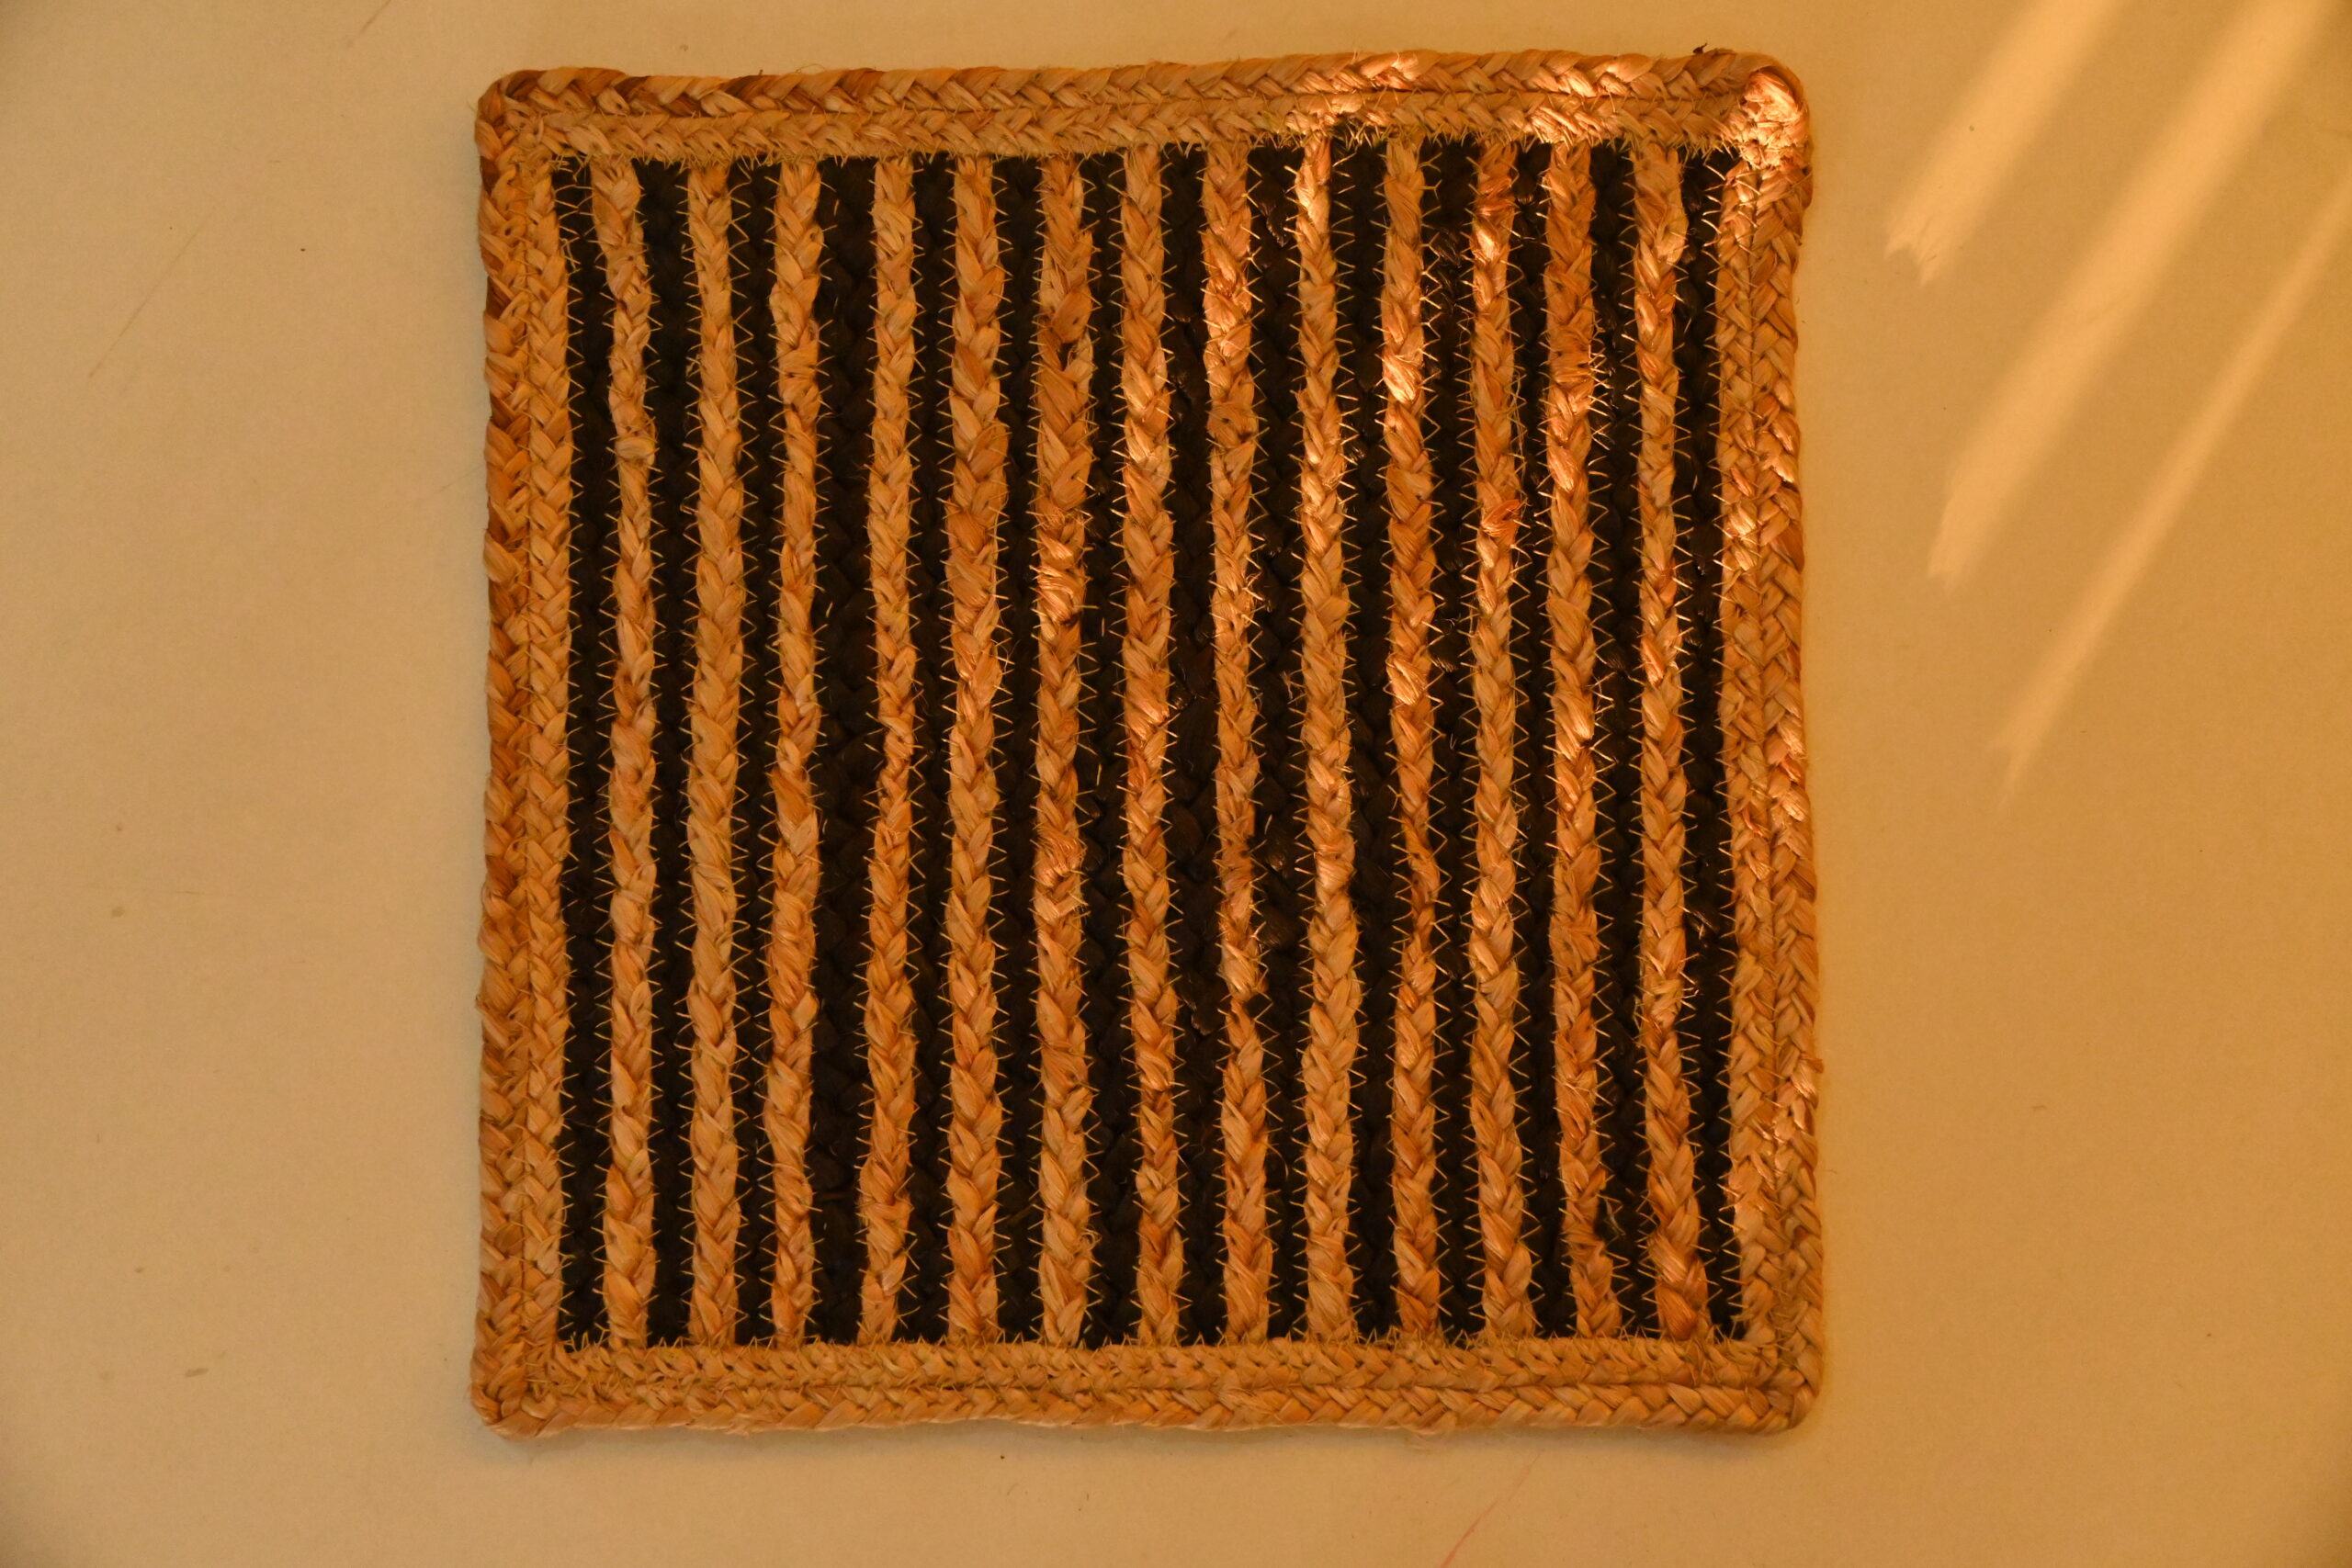 Handmade Square Beige and Black Minimalist Design Jute Braided Tablemat.